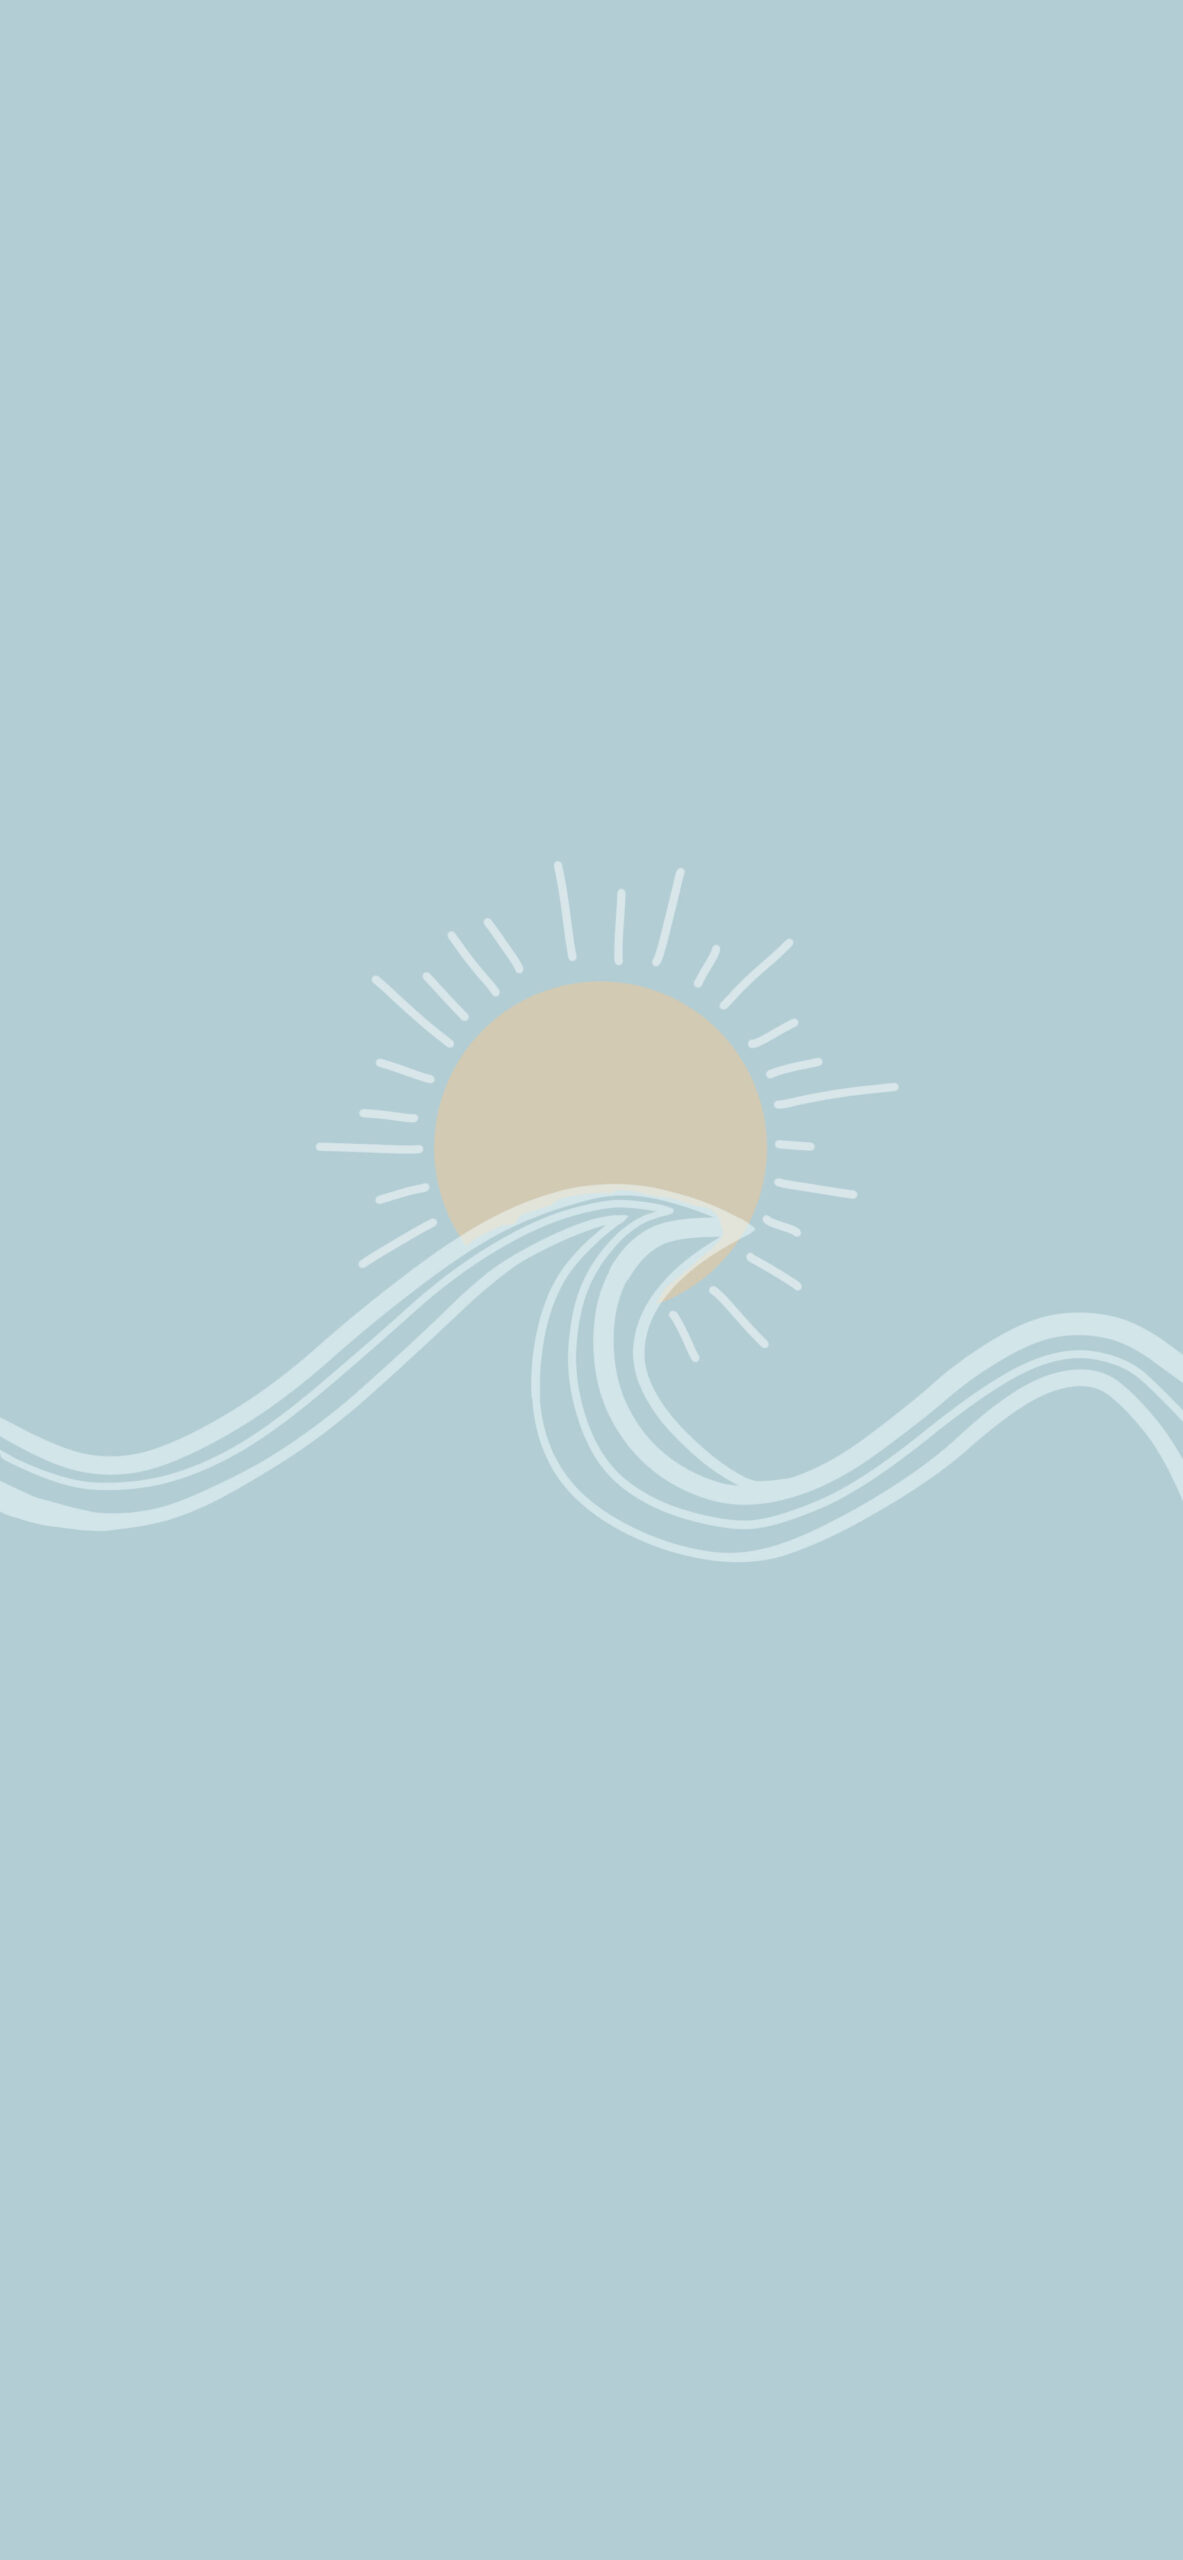 عکس و والپیپر نقاشی مینیمال موج و خورشید با رنگ آبی